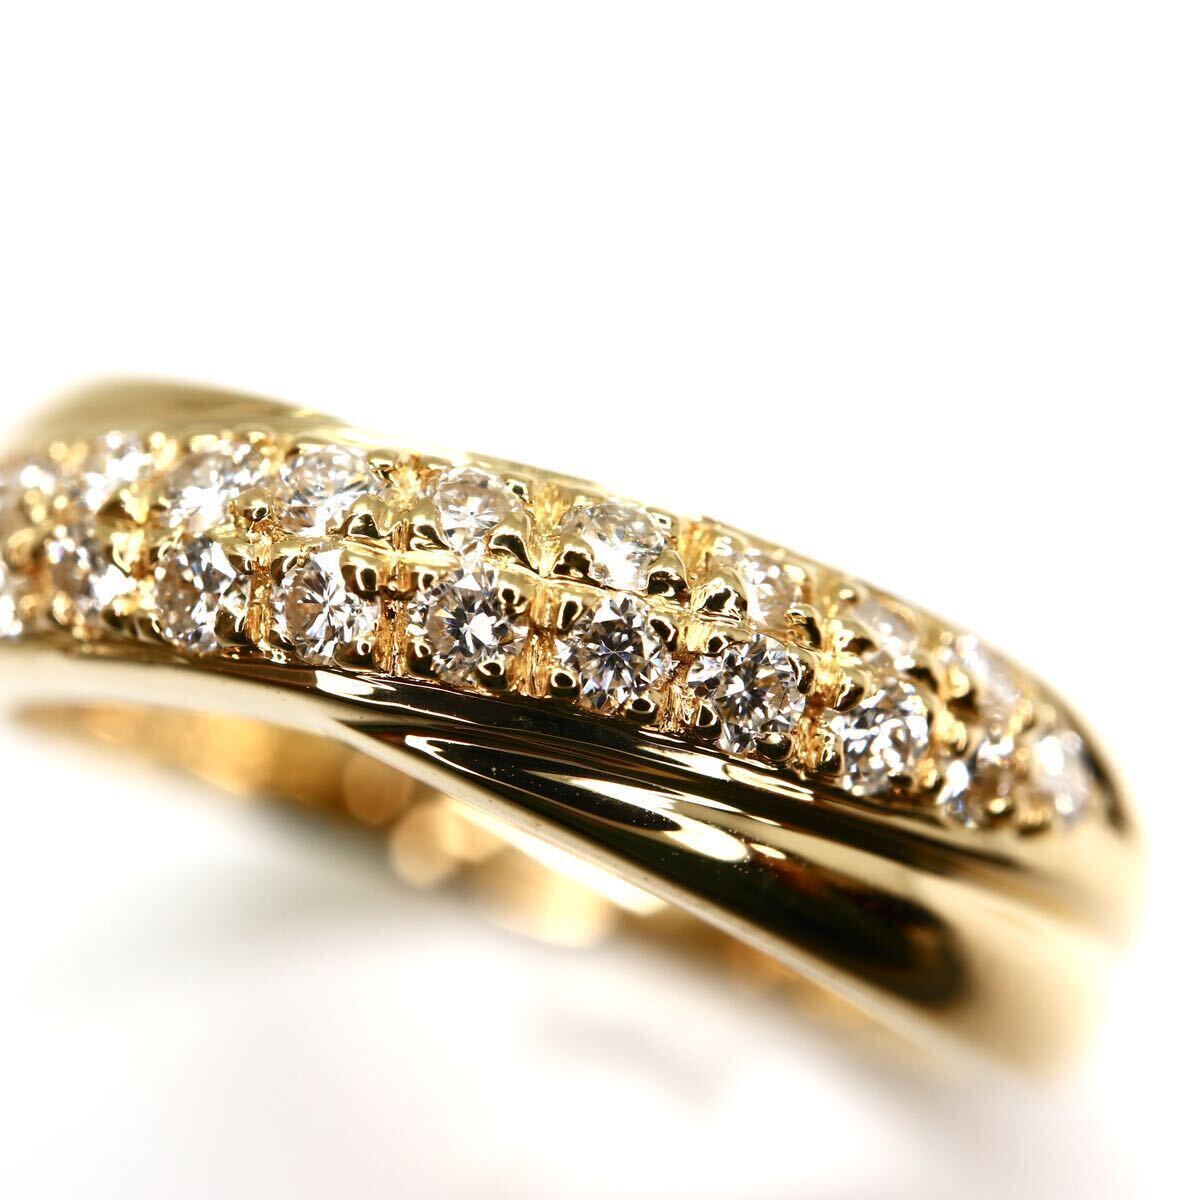 JEWELRY MAKI(ジュエリーマキ)《K18 天然ダイヤモンドリング》M 約4.1g 約12.5号 0.33ct diamond ring 指輪 jewelry ED3/ED5の画像4